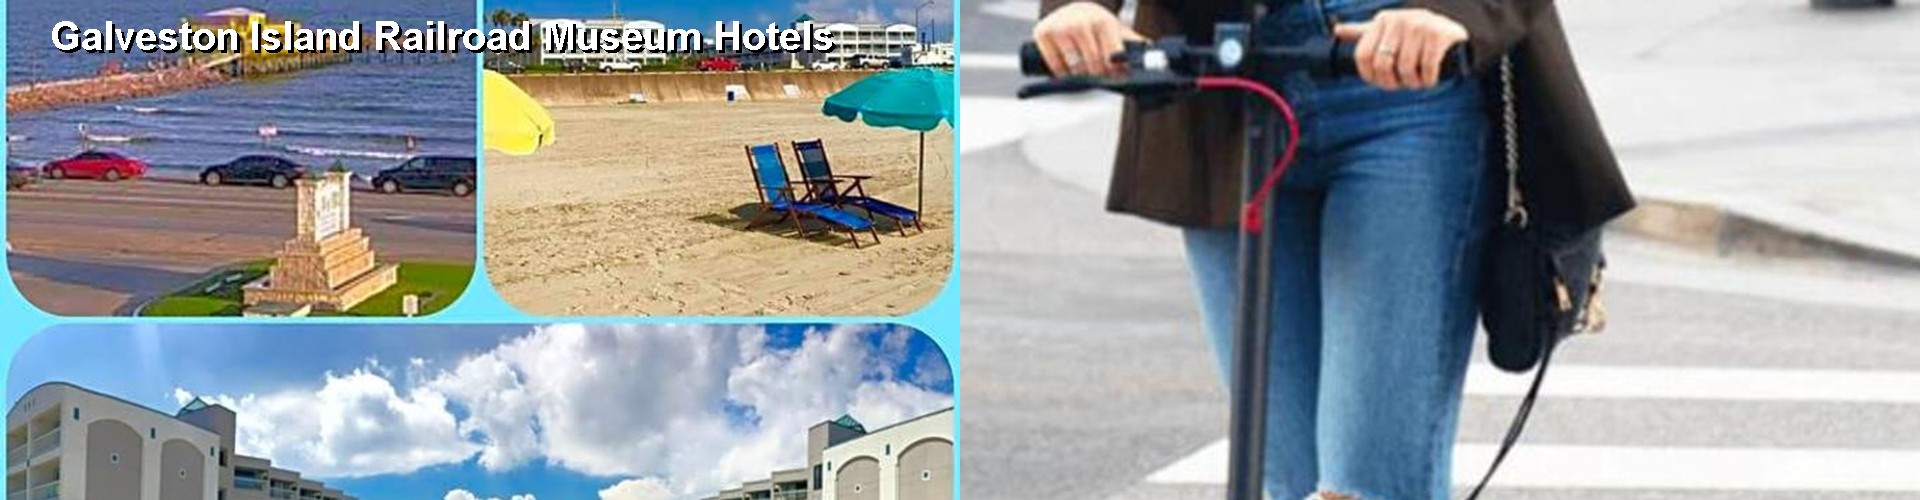 5 Best Hotels near Galveston Island Railroad Museum